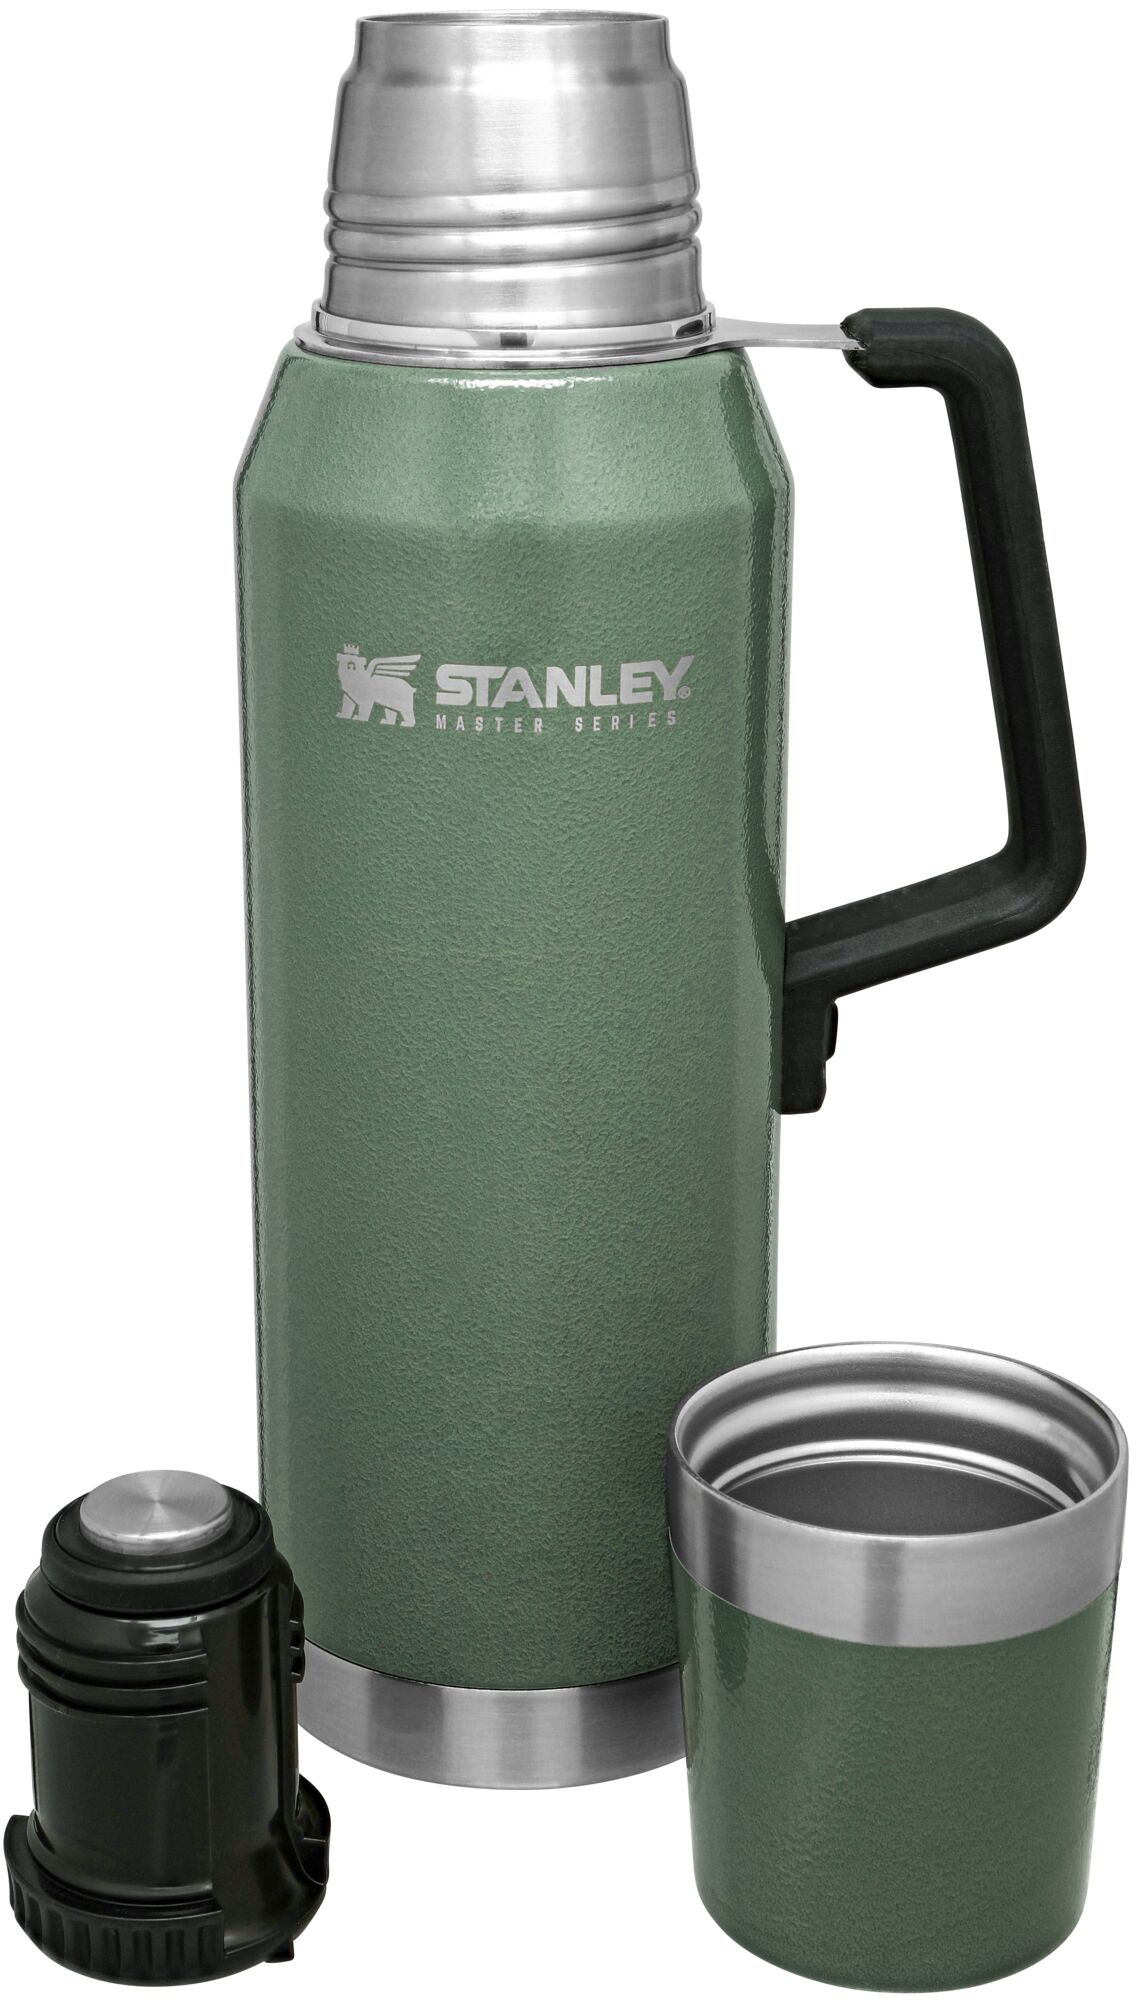 STANLEY Stainless Steel 1.1 Q/ 1 Liter THERMOS EN12546-1 Green